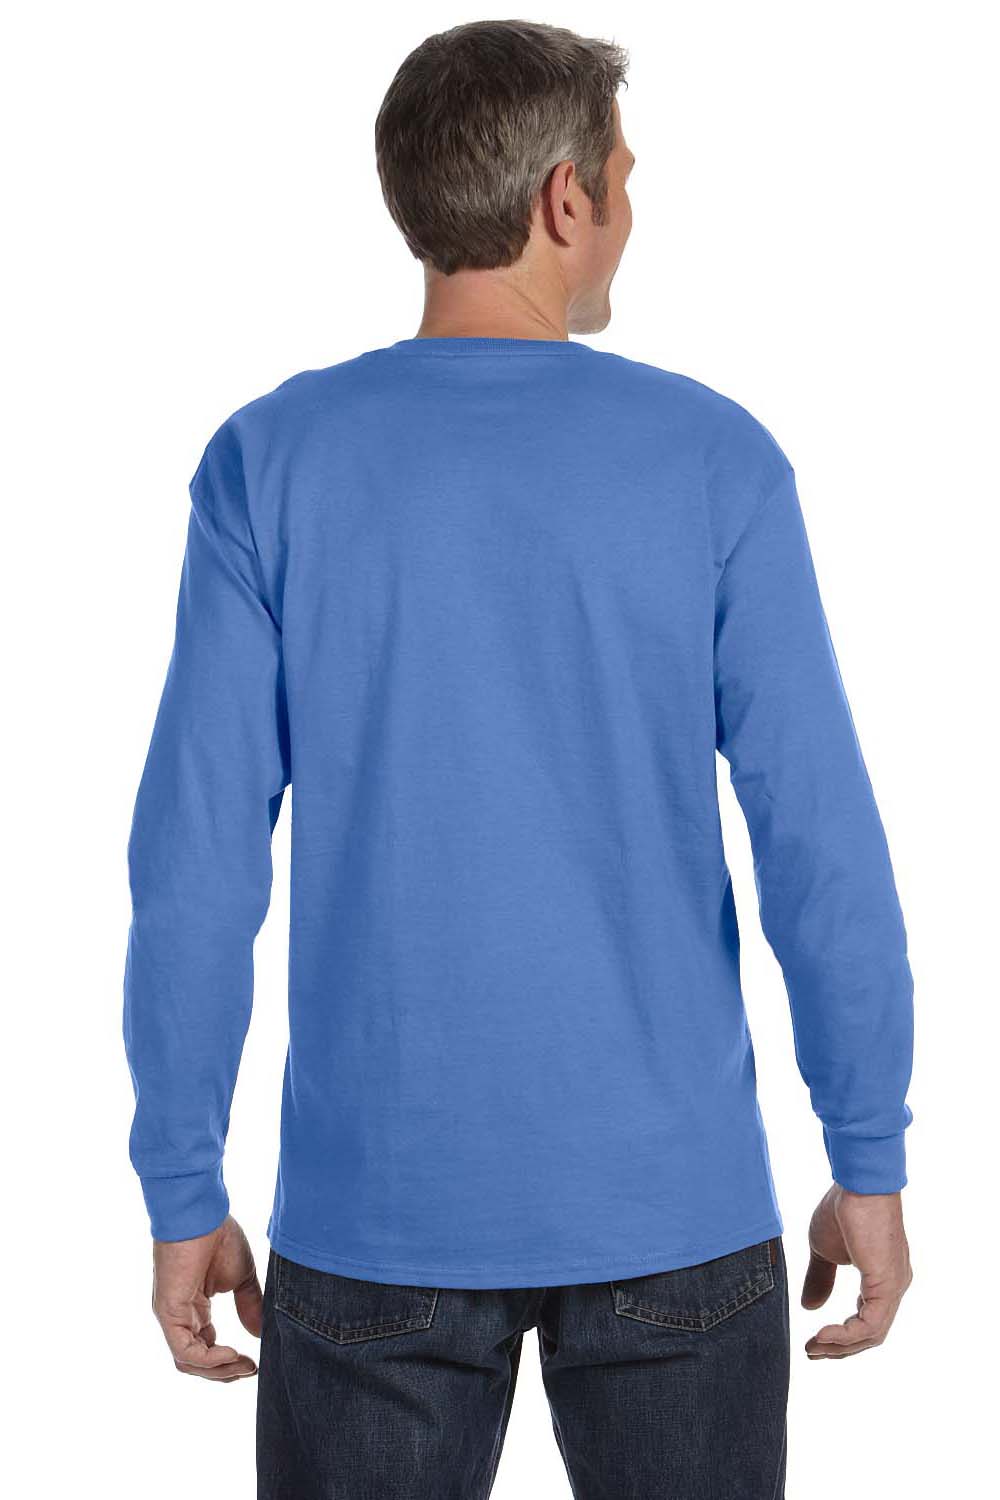 Jerzees 29L Mens Dri-Power Moisture Wicking Long Sleeve Crewneck T-Shirt Columbia Blue Back